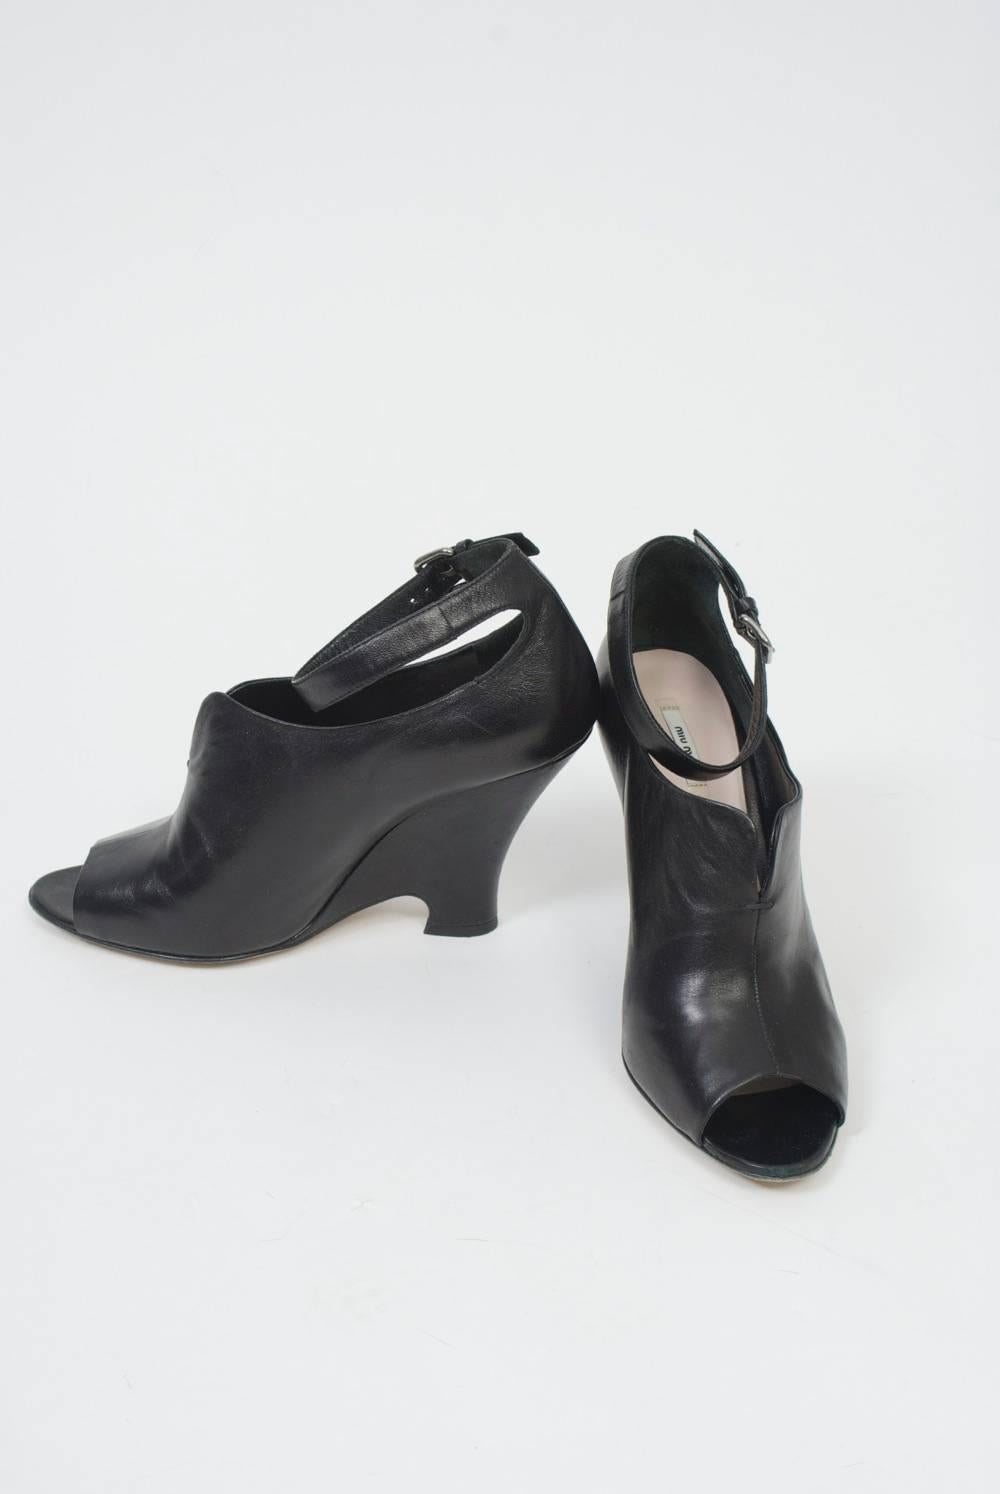 Miu Miu Black Leather Shoes 3